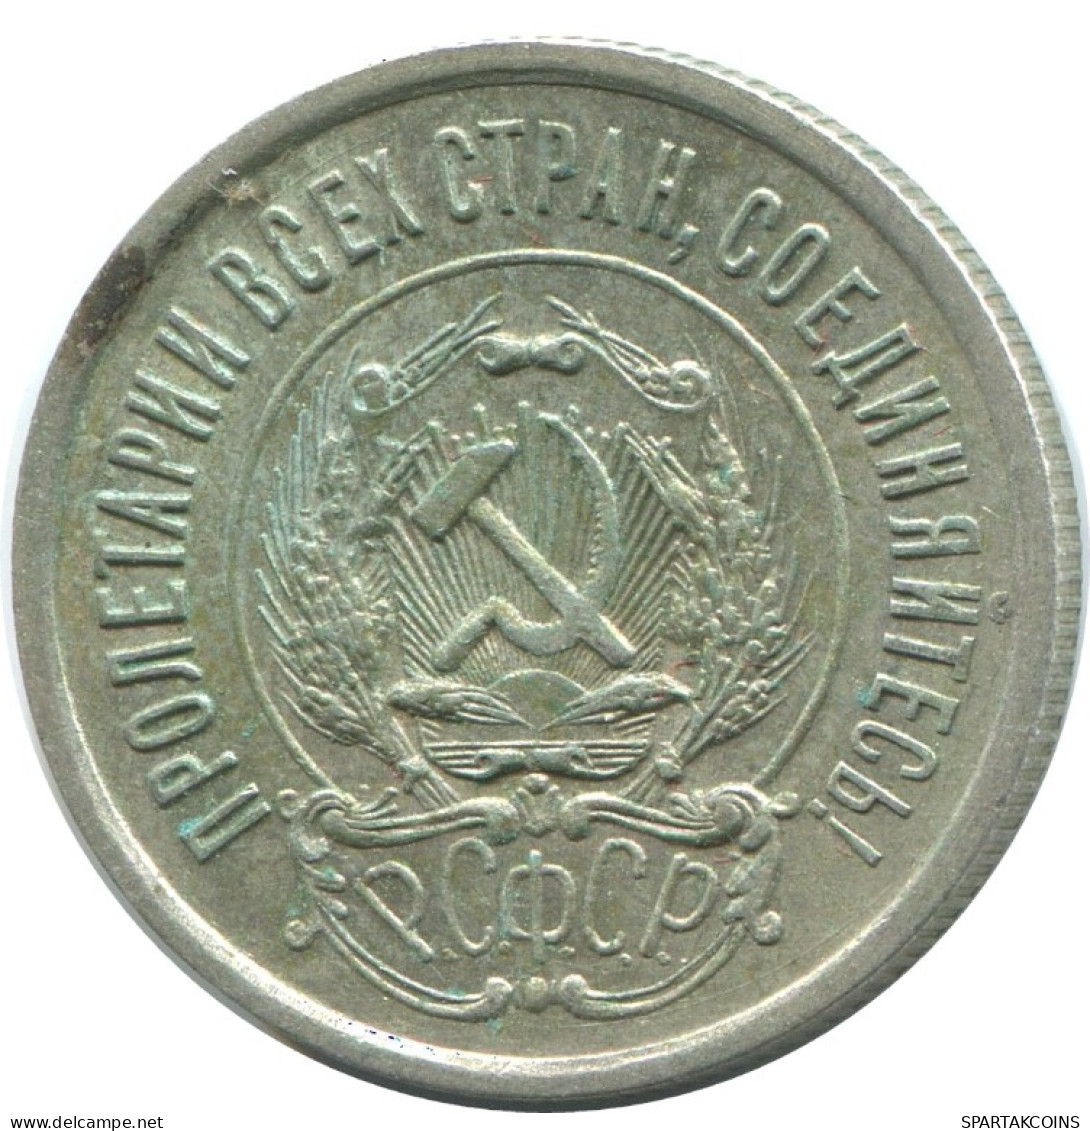 20 KOPEKS 1923 RUSSIA RSFSR SILVER Coin HIGH GRADE #AF418.4.U.A - Russia